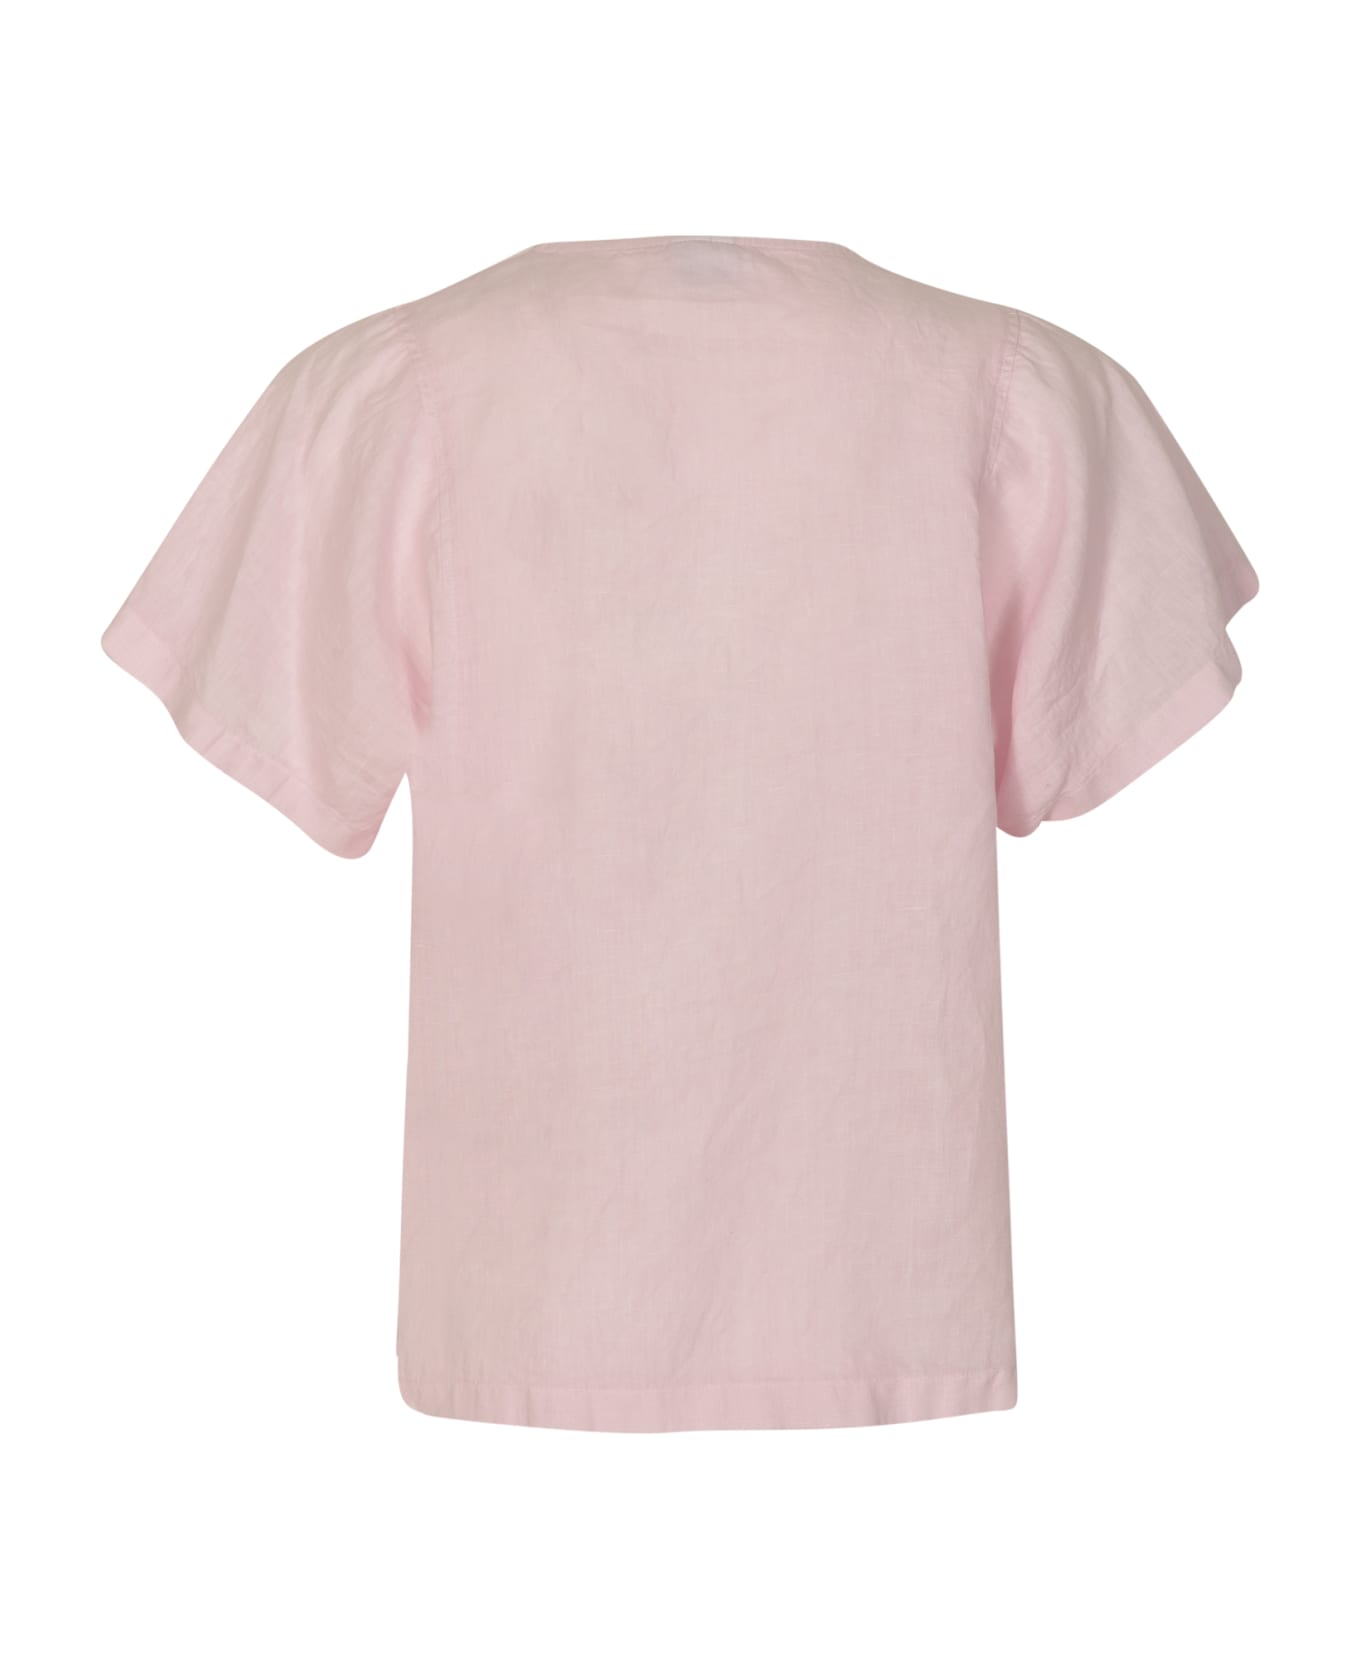 Aspesi Band Collar Plain Short-sleeved Shirt - Pink